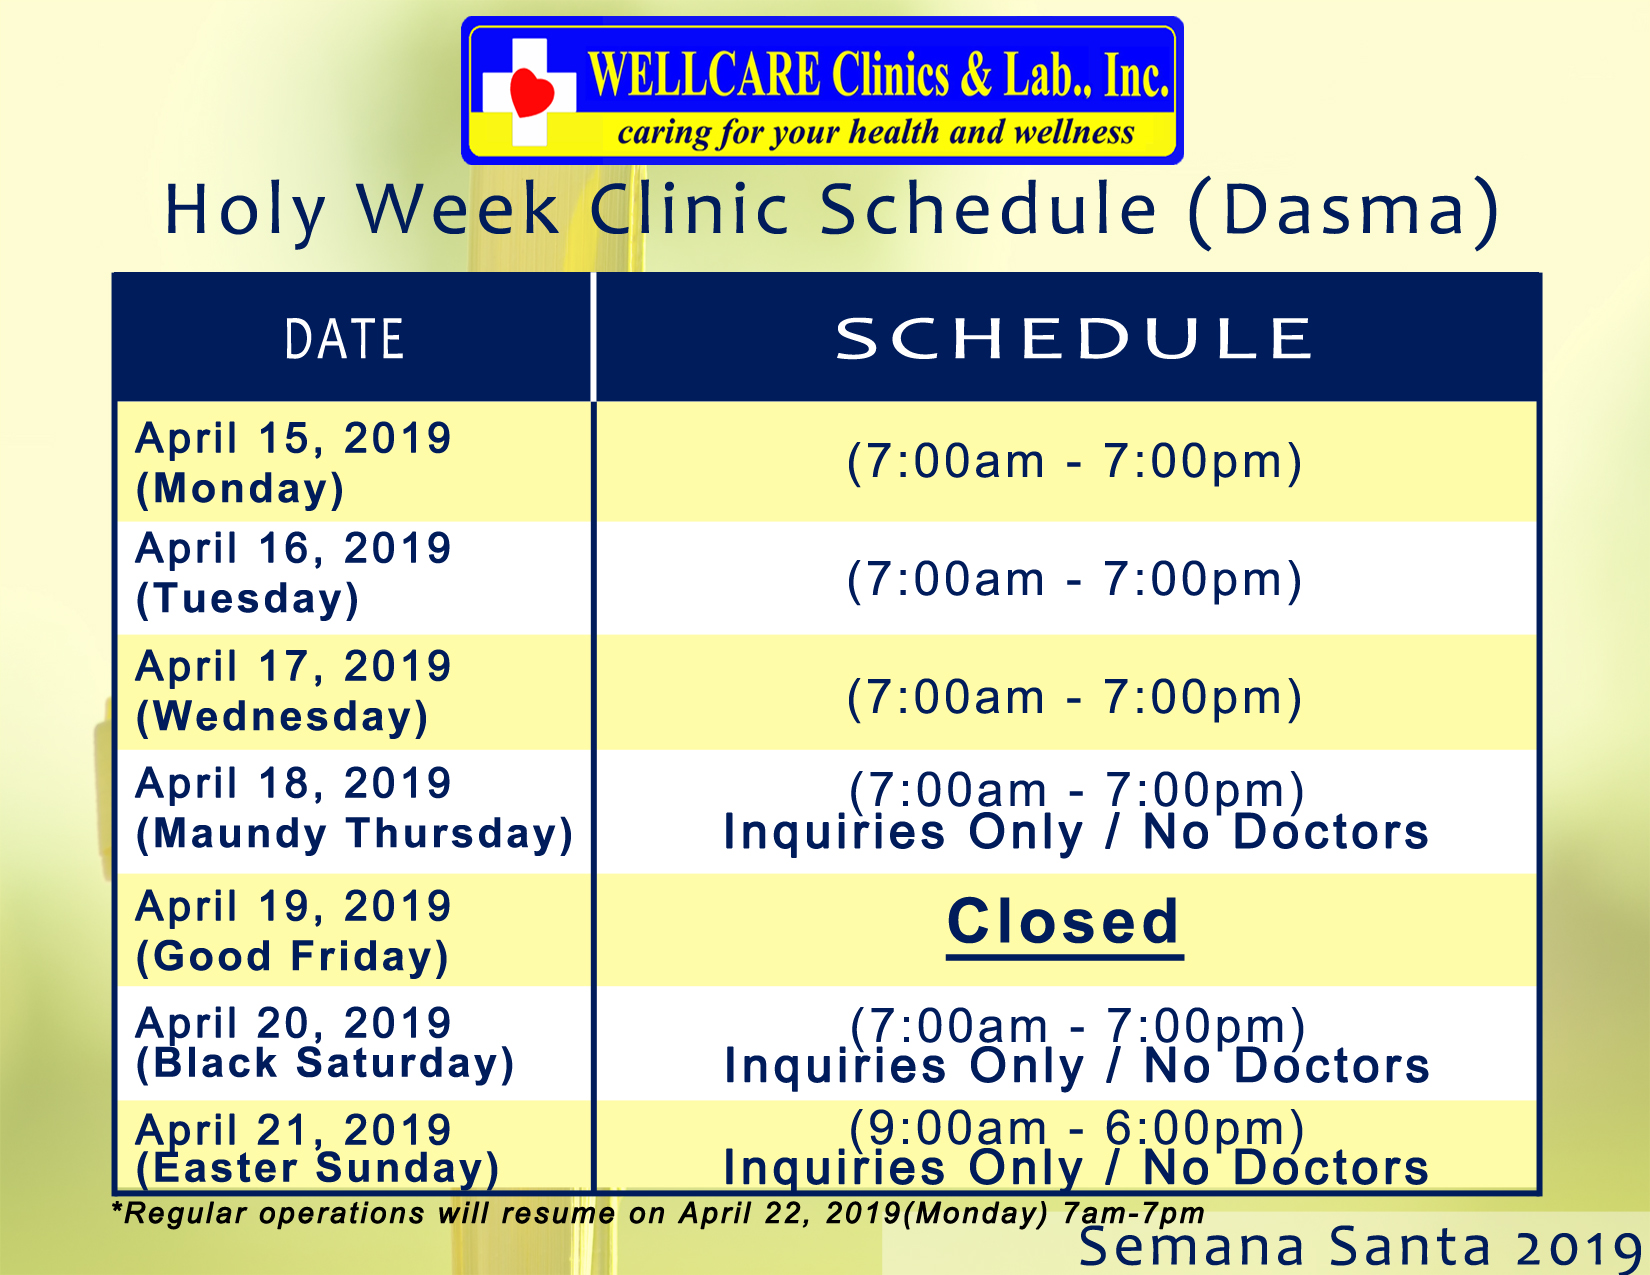 (Wellcare Dasma branch) 2nd Floor Waltermart Aguinaldo H-way Dasmariñas City, Cavite For more Inquiries call us at (046)450-5116, 0933.8204079